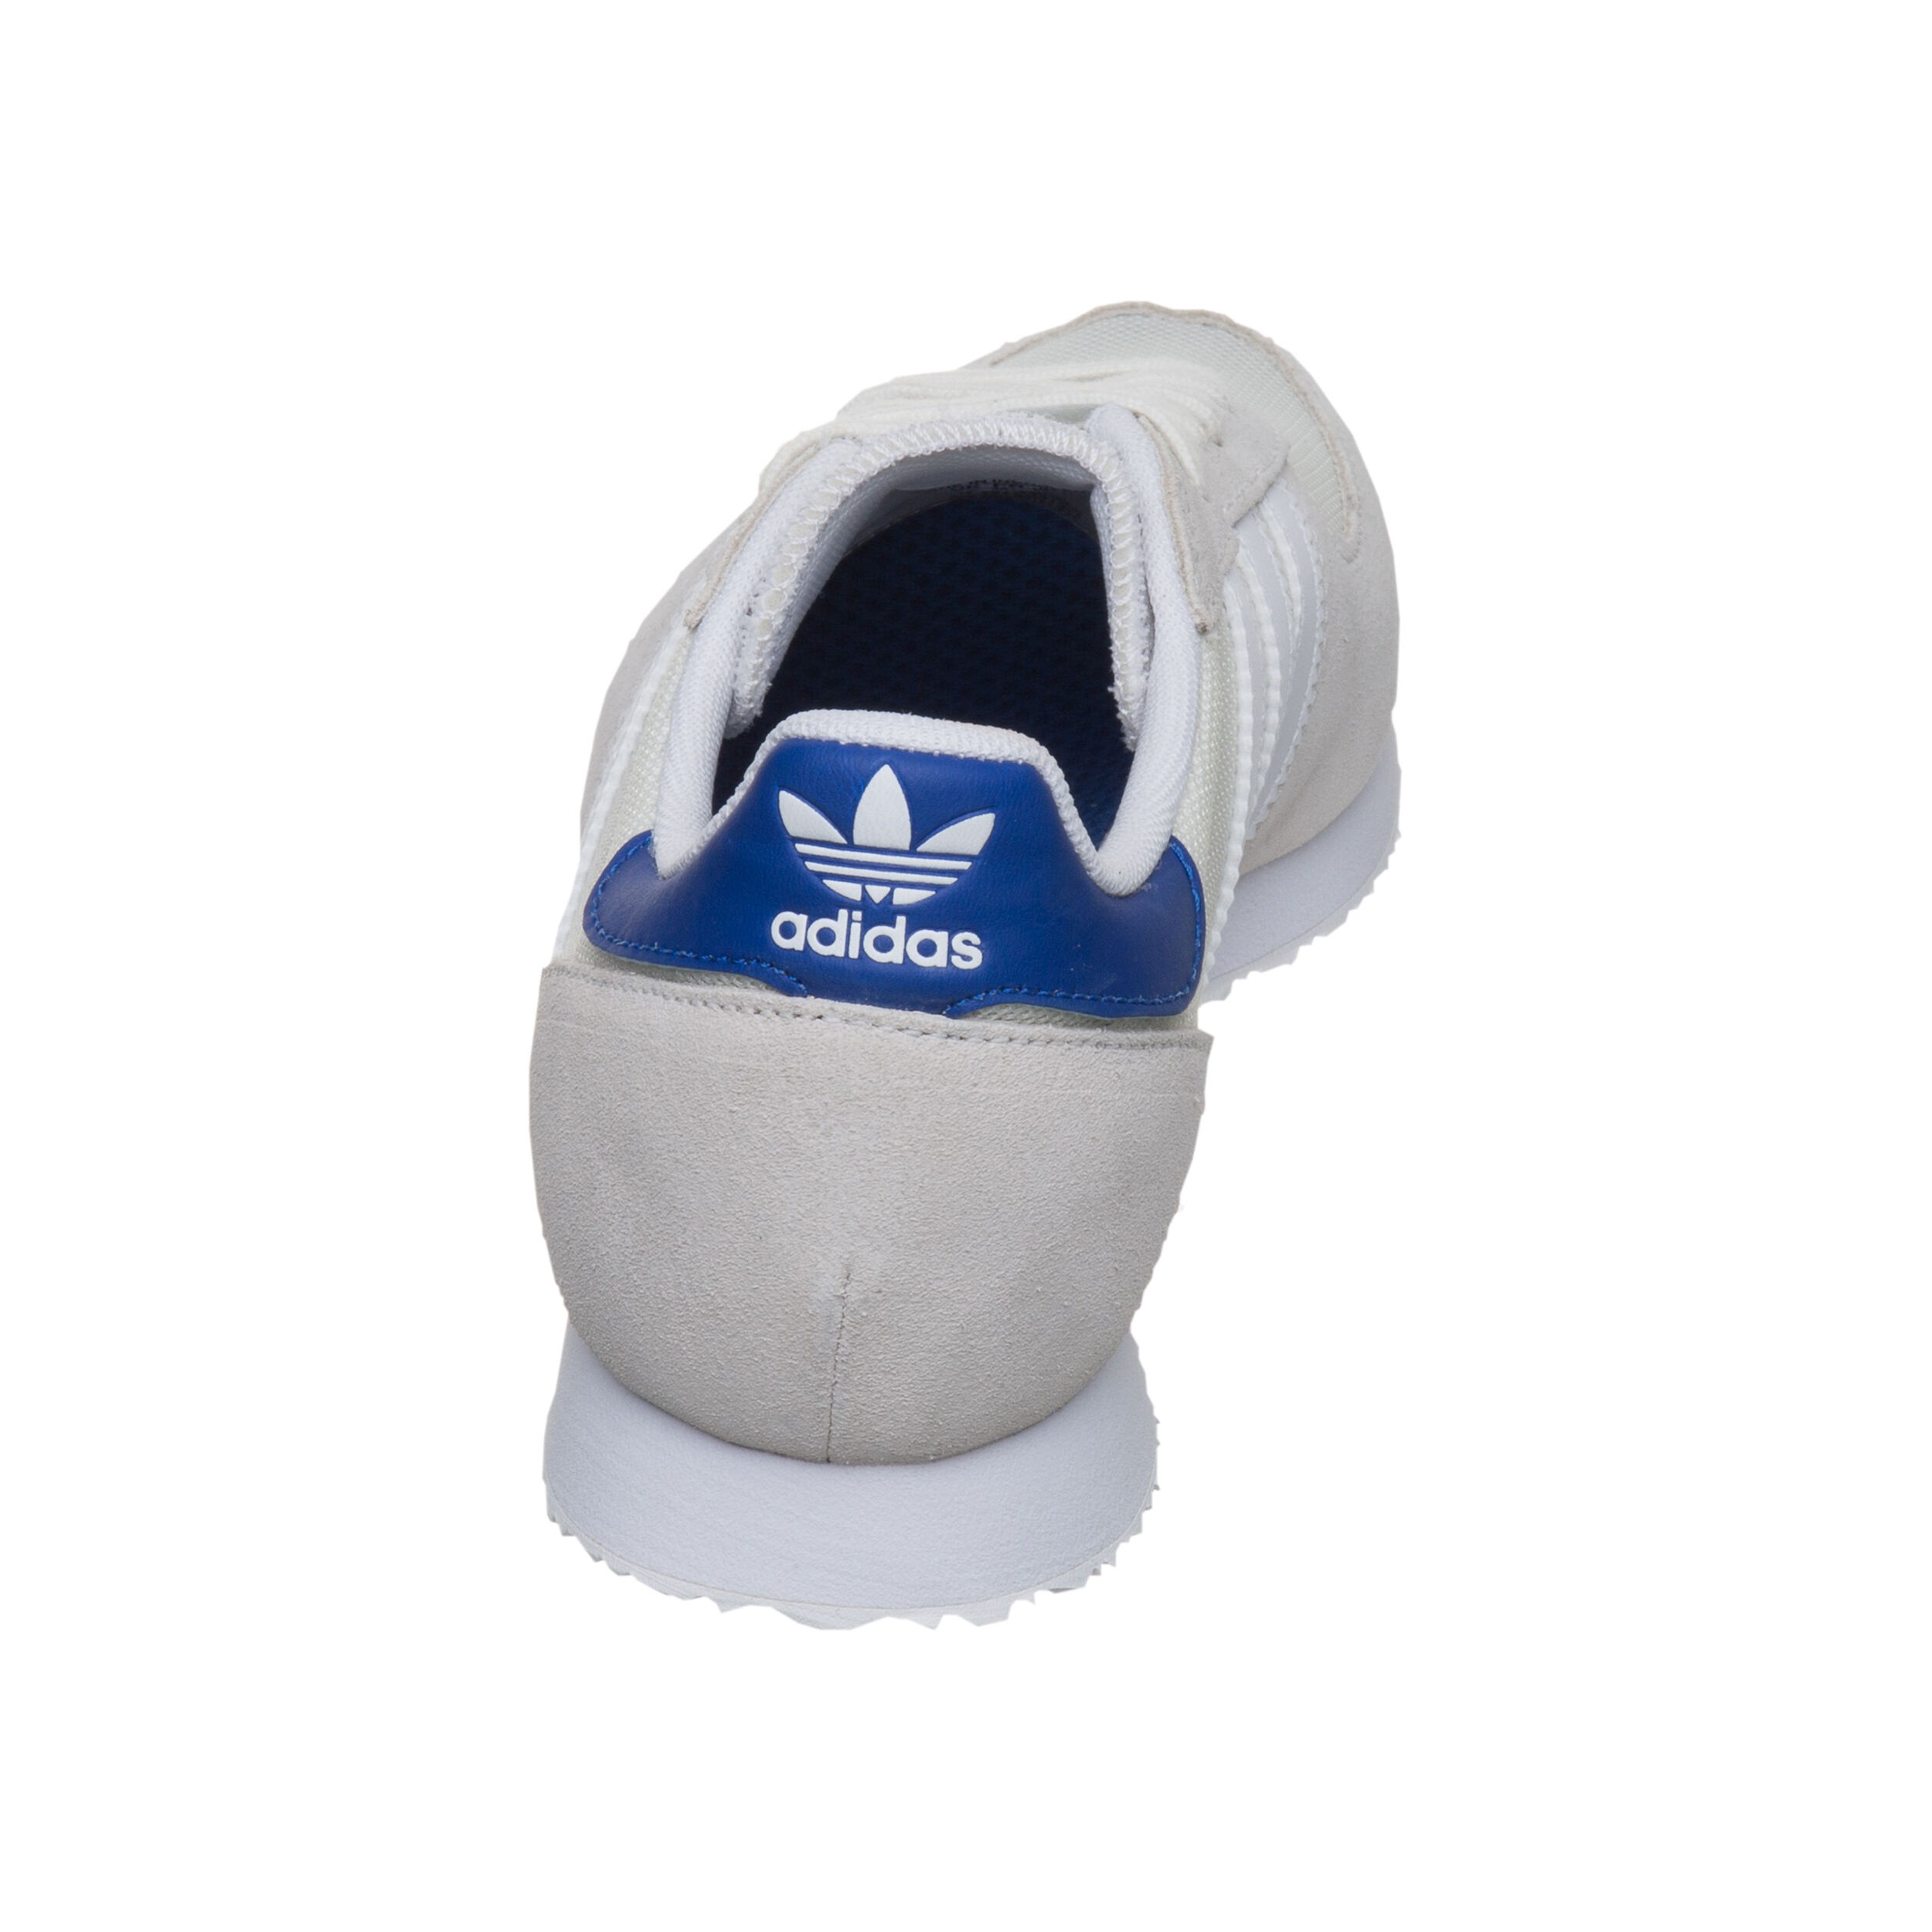 Buy adidas Originals ZX Racer Sneakers Women White, Dark Blue 